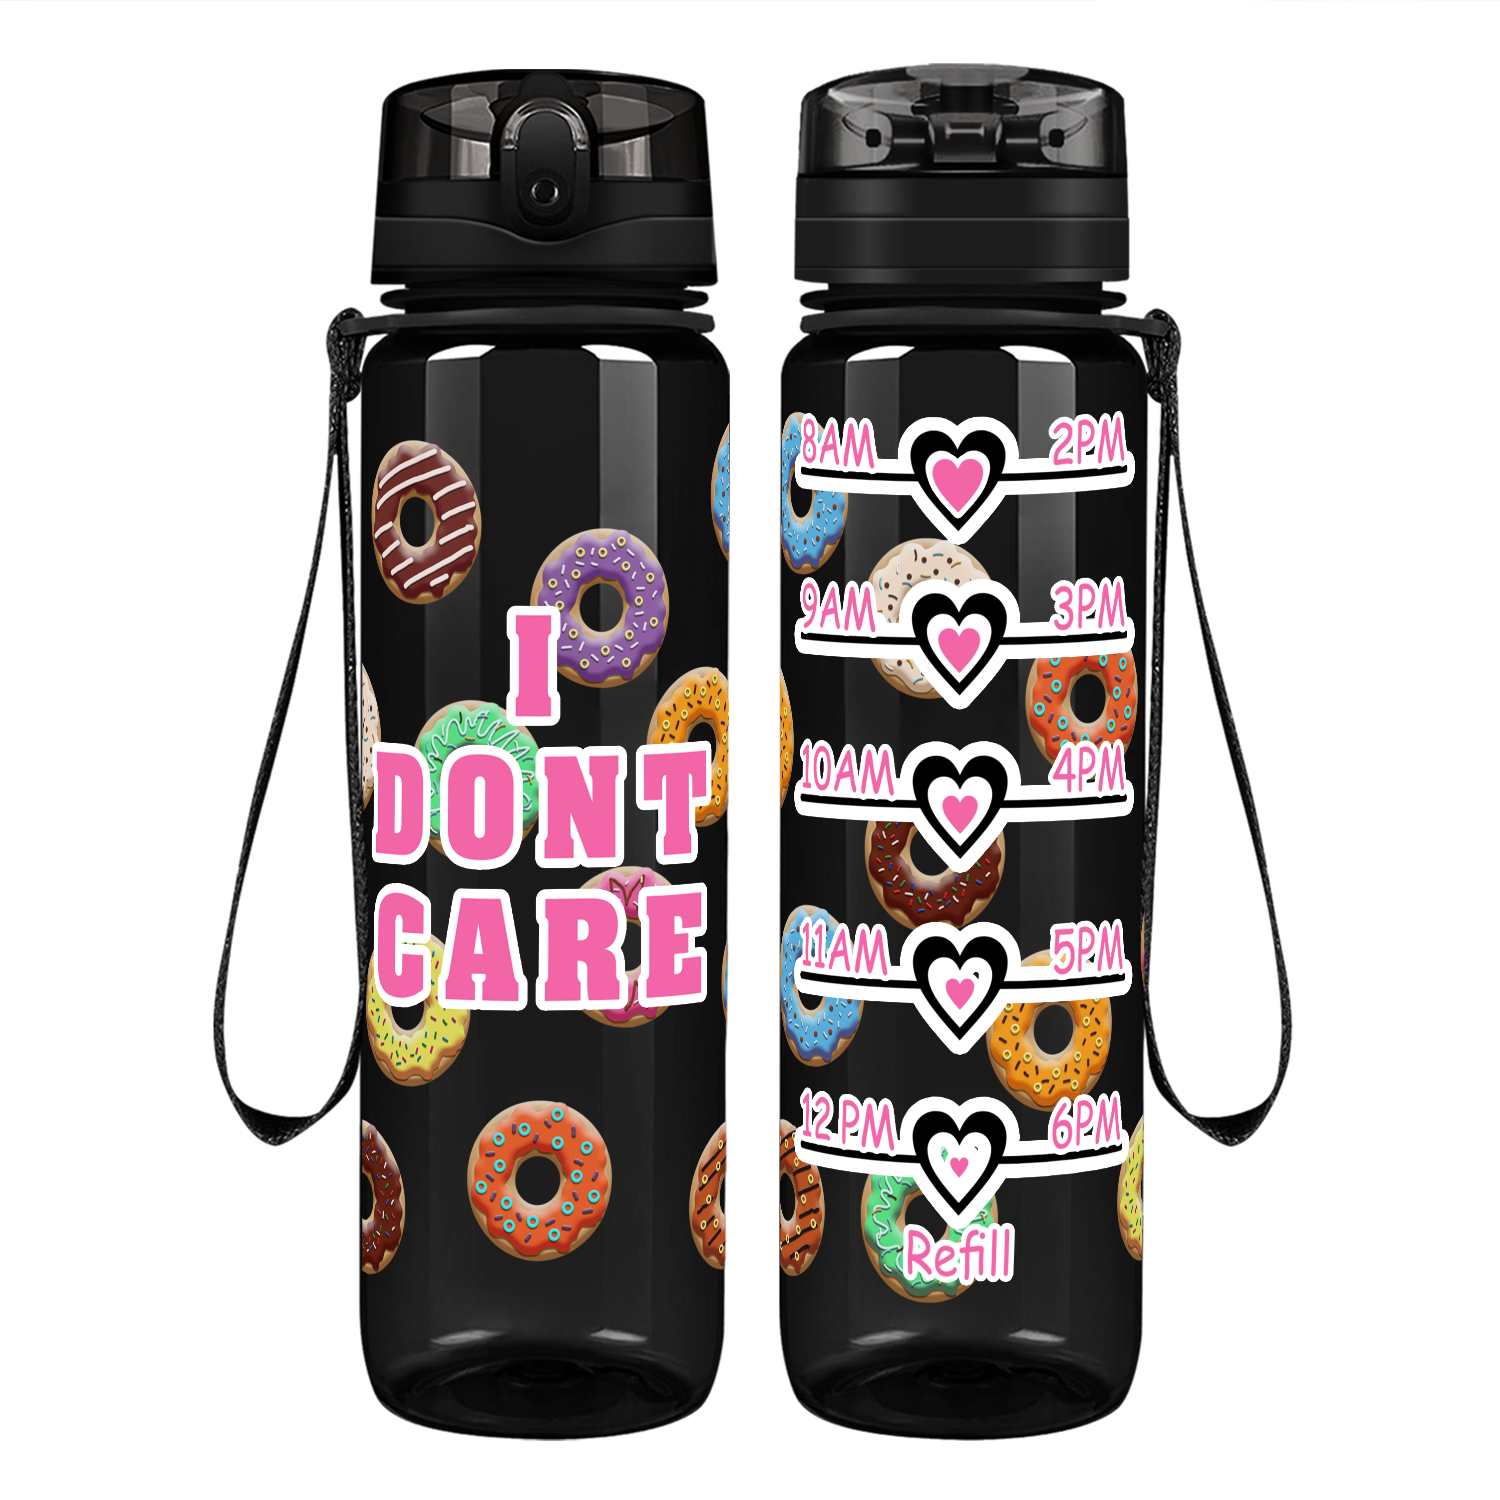 I Donut Care on 32 oz Motivational Tracking Water Bottle